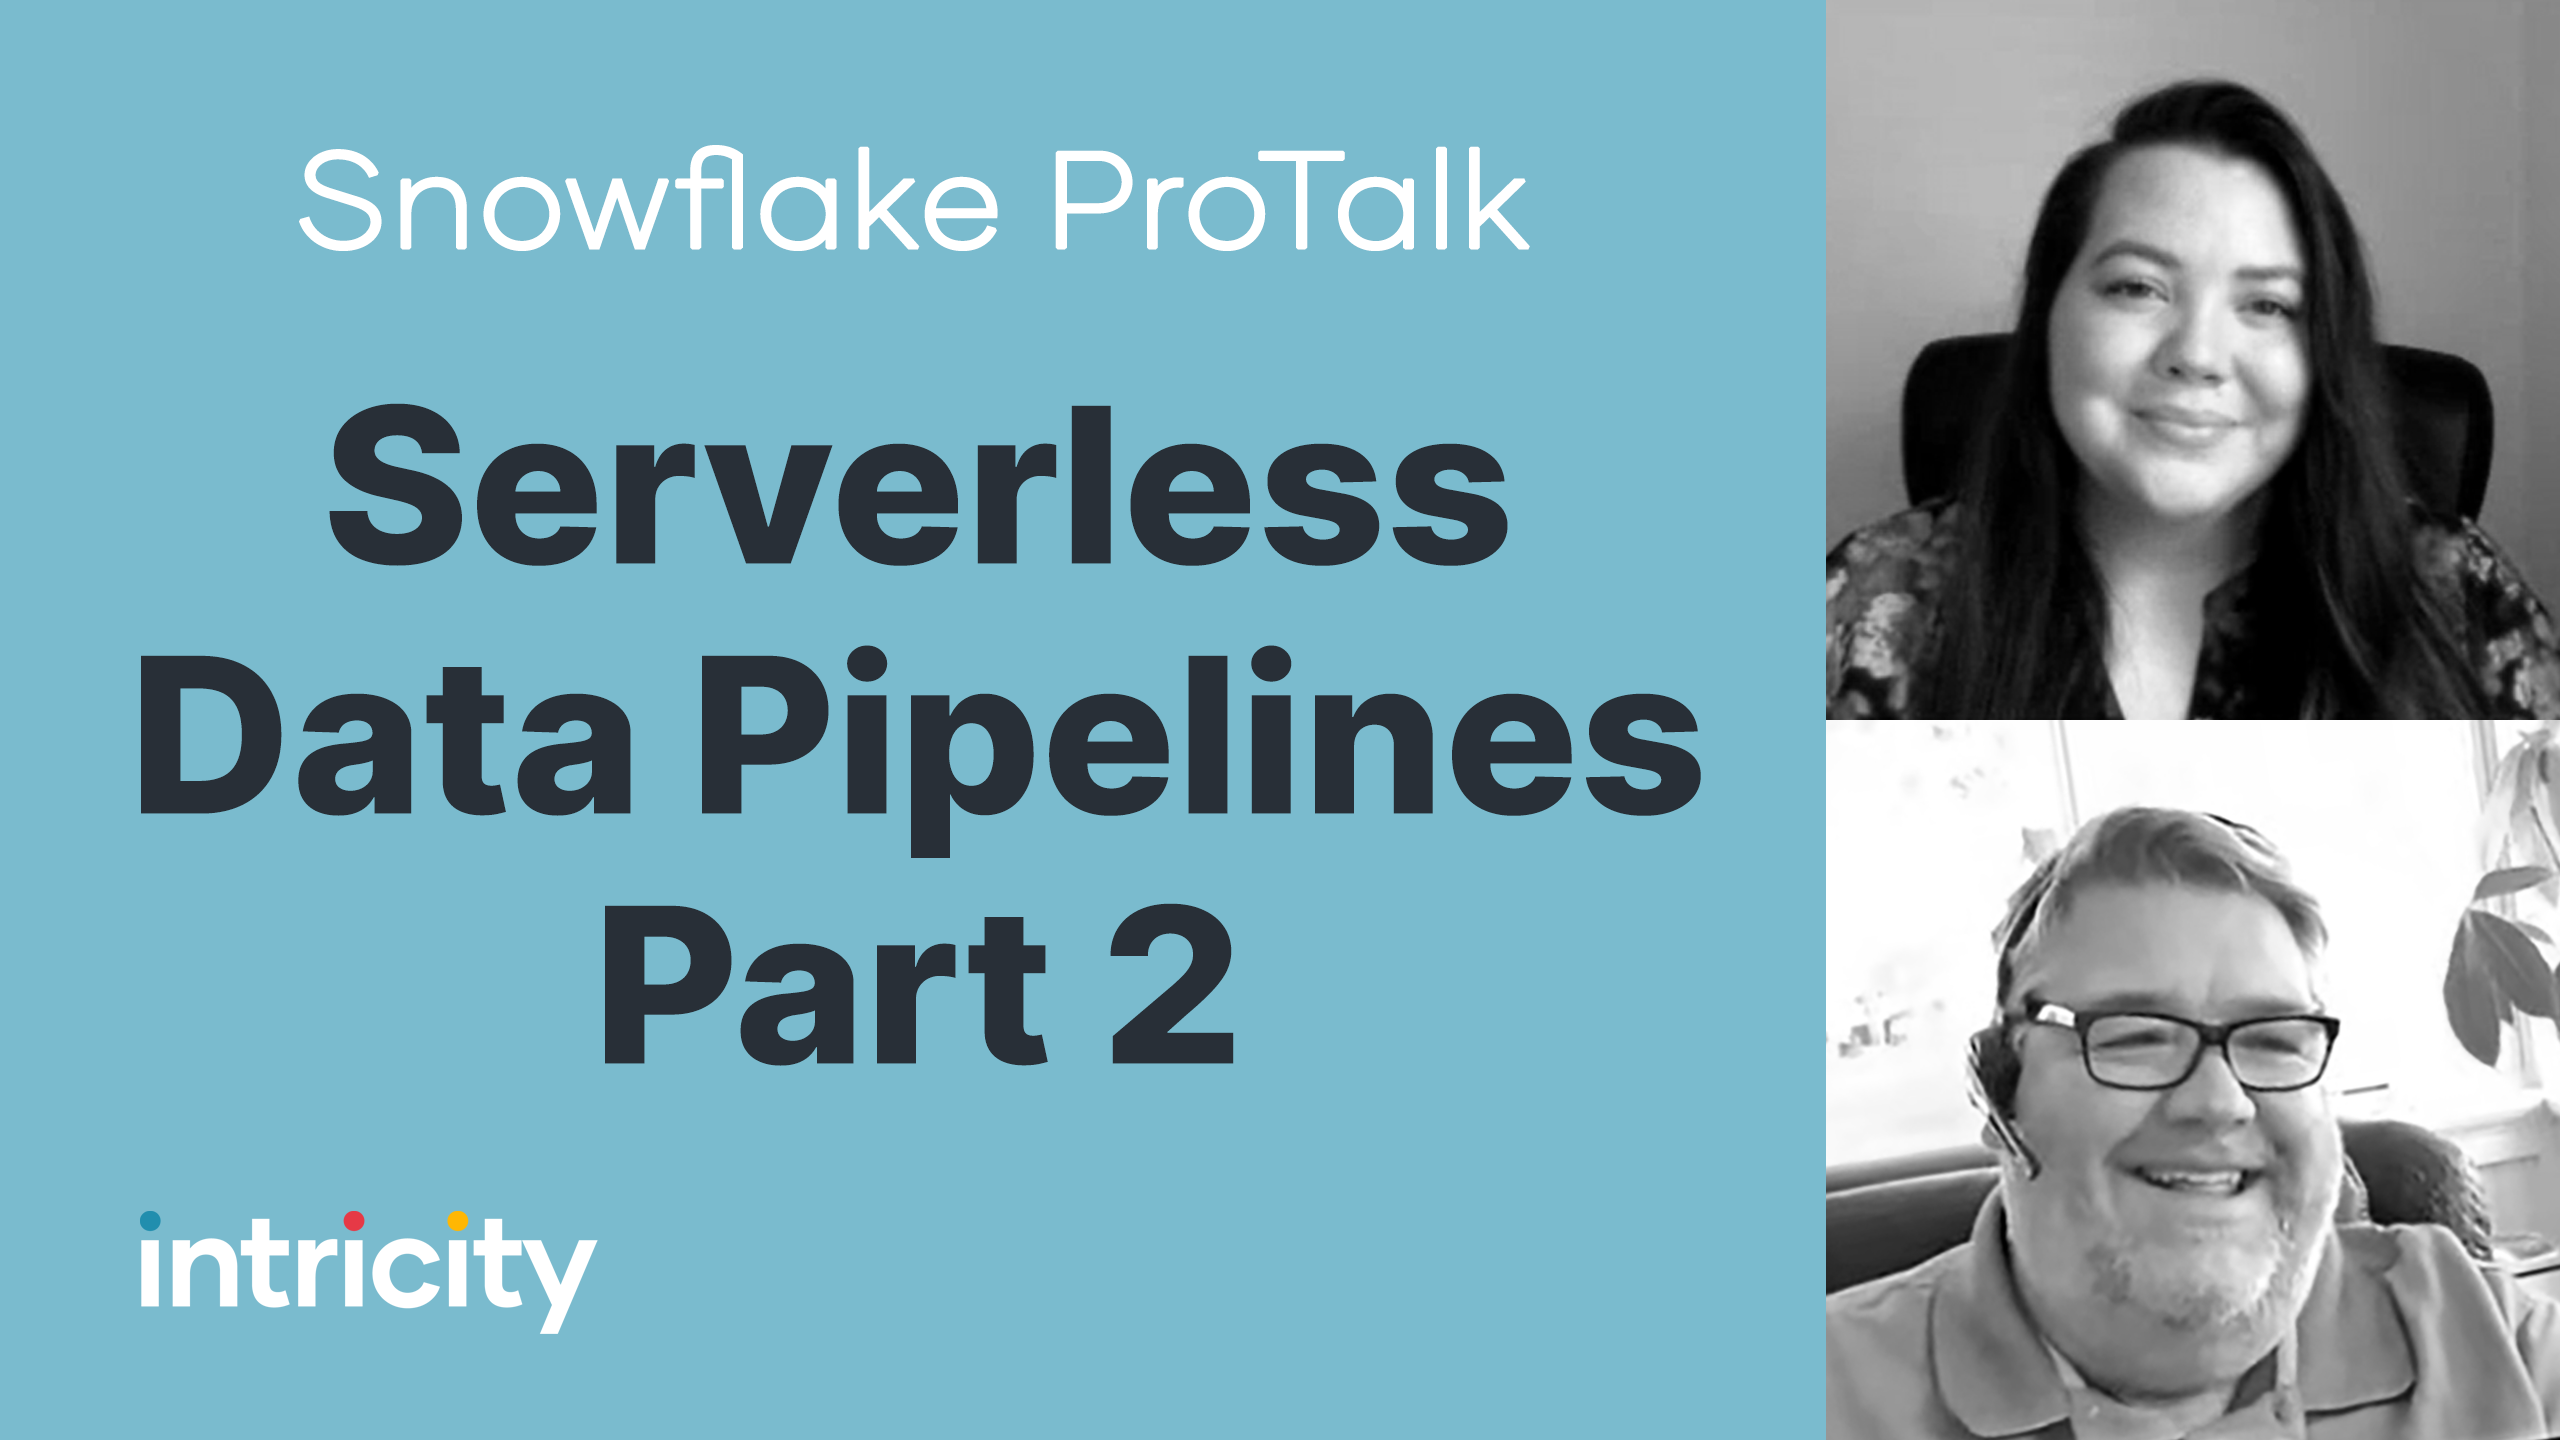 Snowflake ProTalk: Serverless Data Pipelines - Part 2